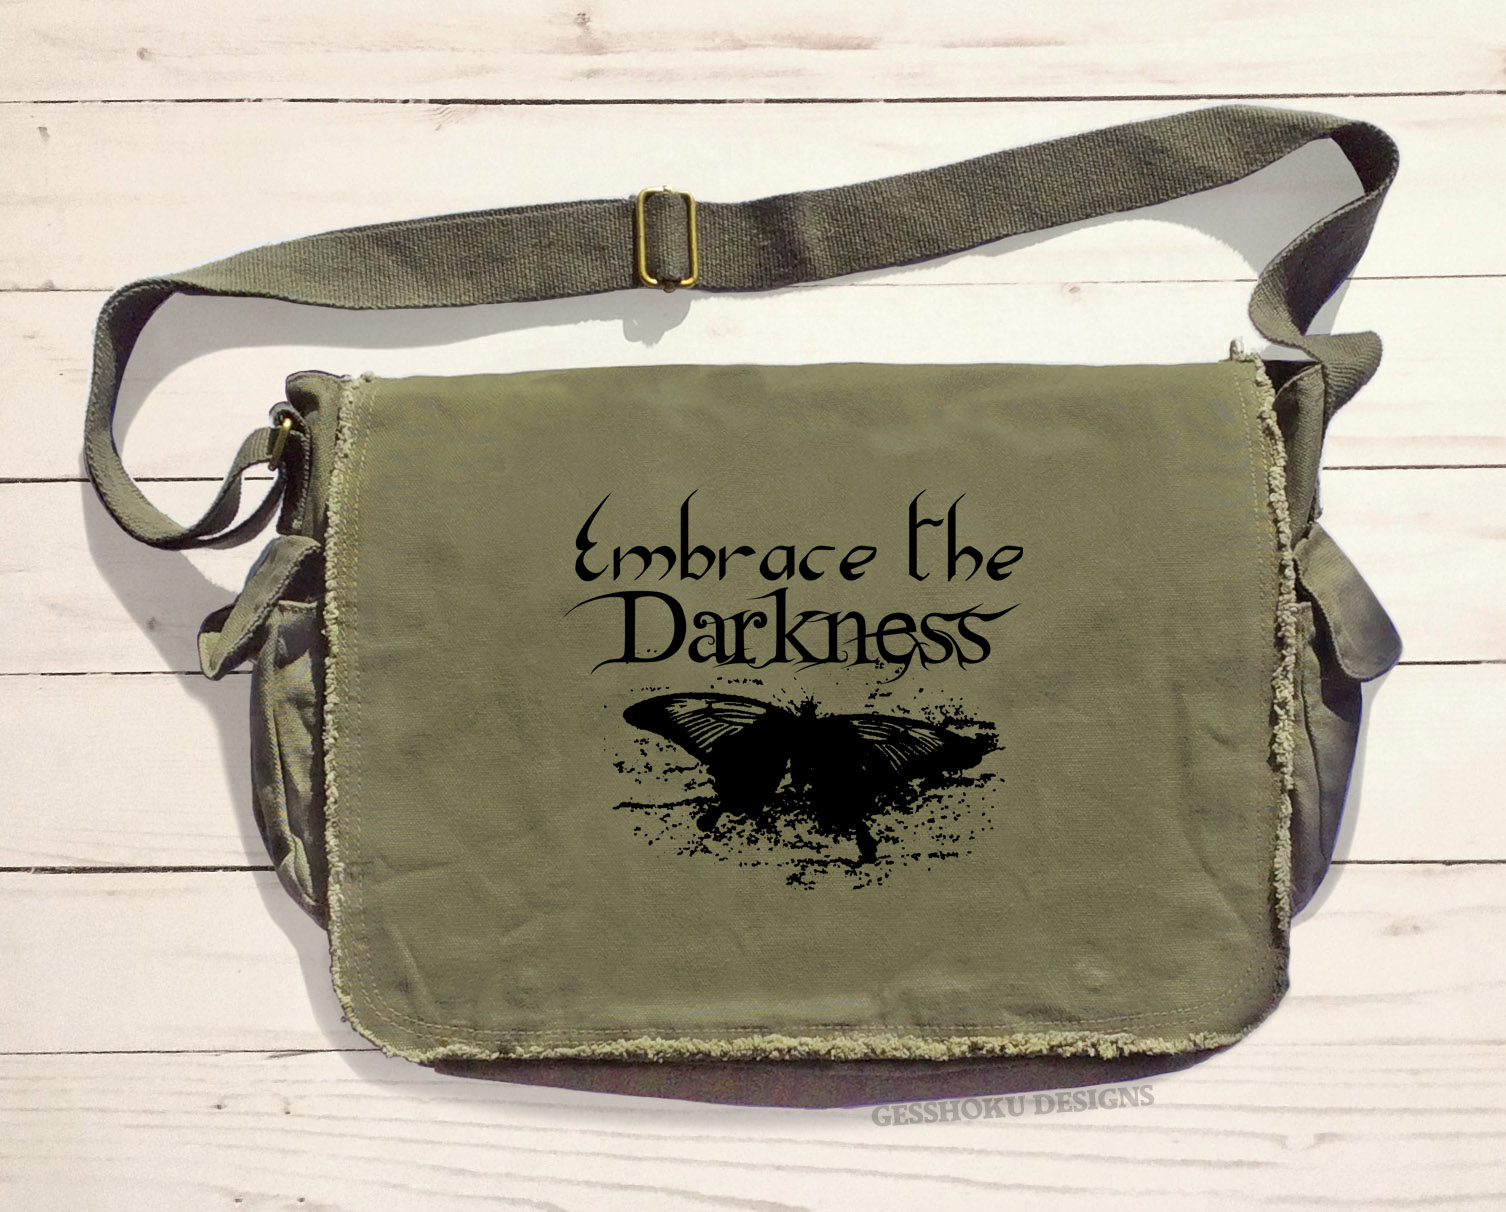 Embrace the Darkness Messenger Bag - Khaki Green